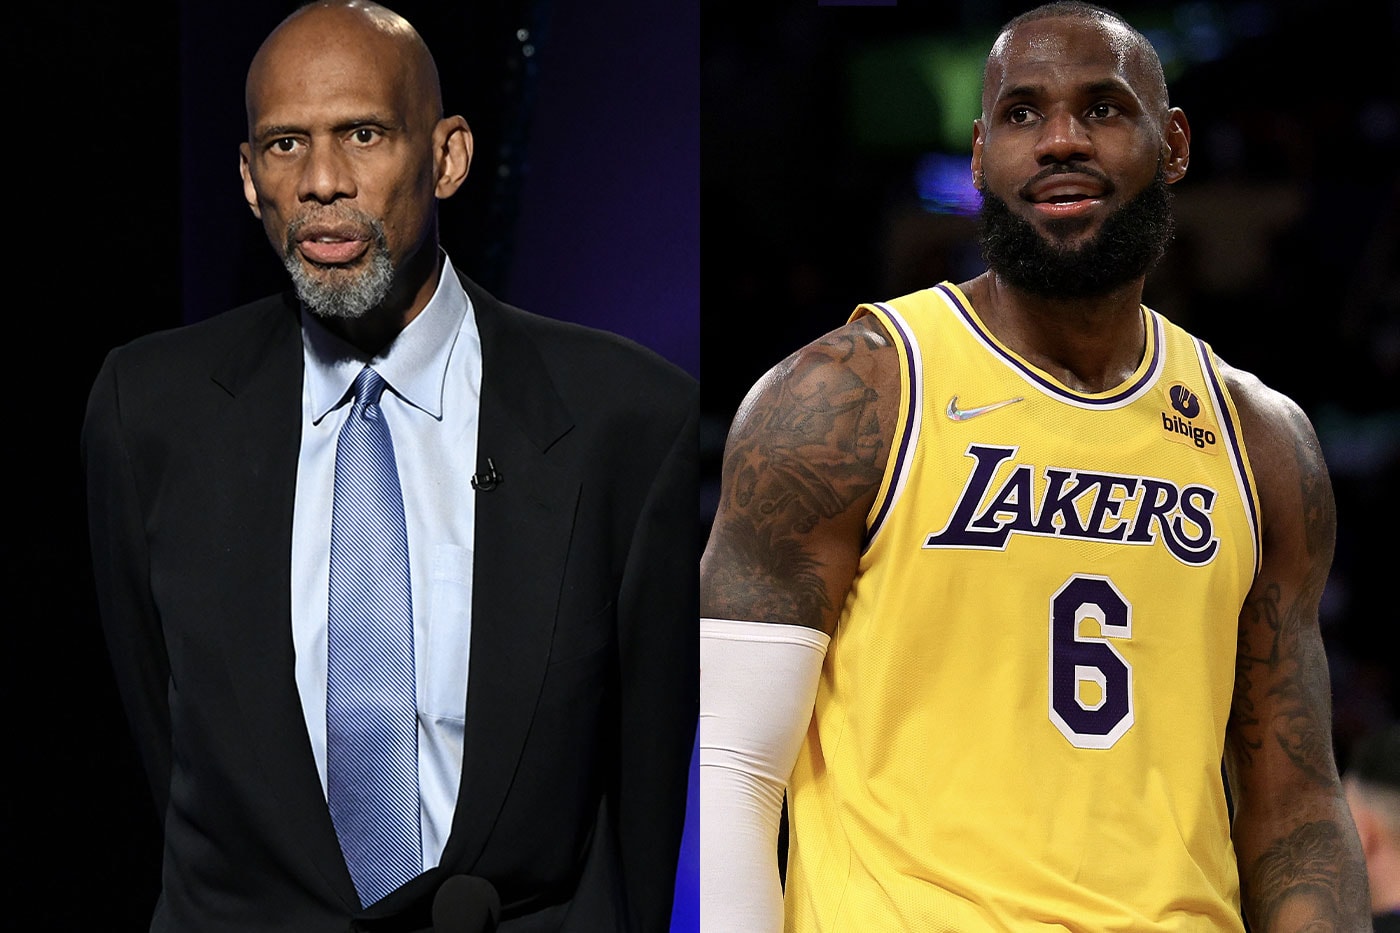 Lakers Legend Kareem Abdul-Jabbar Criticizes Lebron James' Actions, "He Should Be Embarrassed" los angeles lakers nba basketball sam cassell celebration covid-19 spider man meme